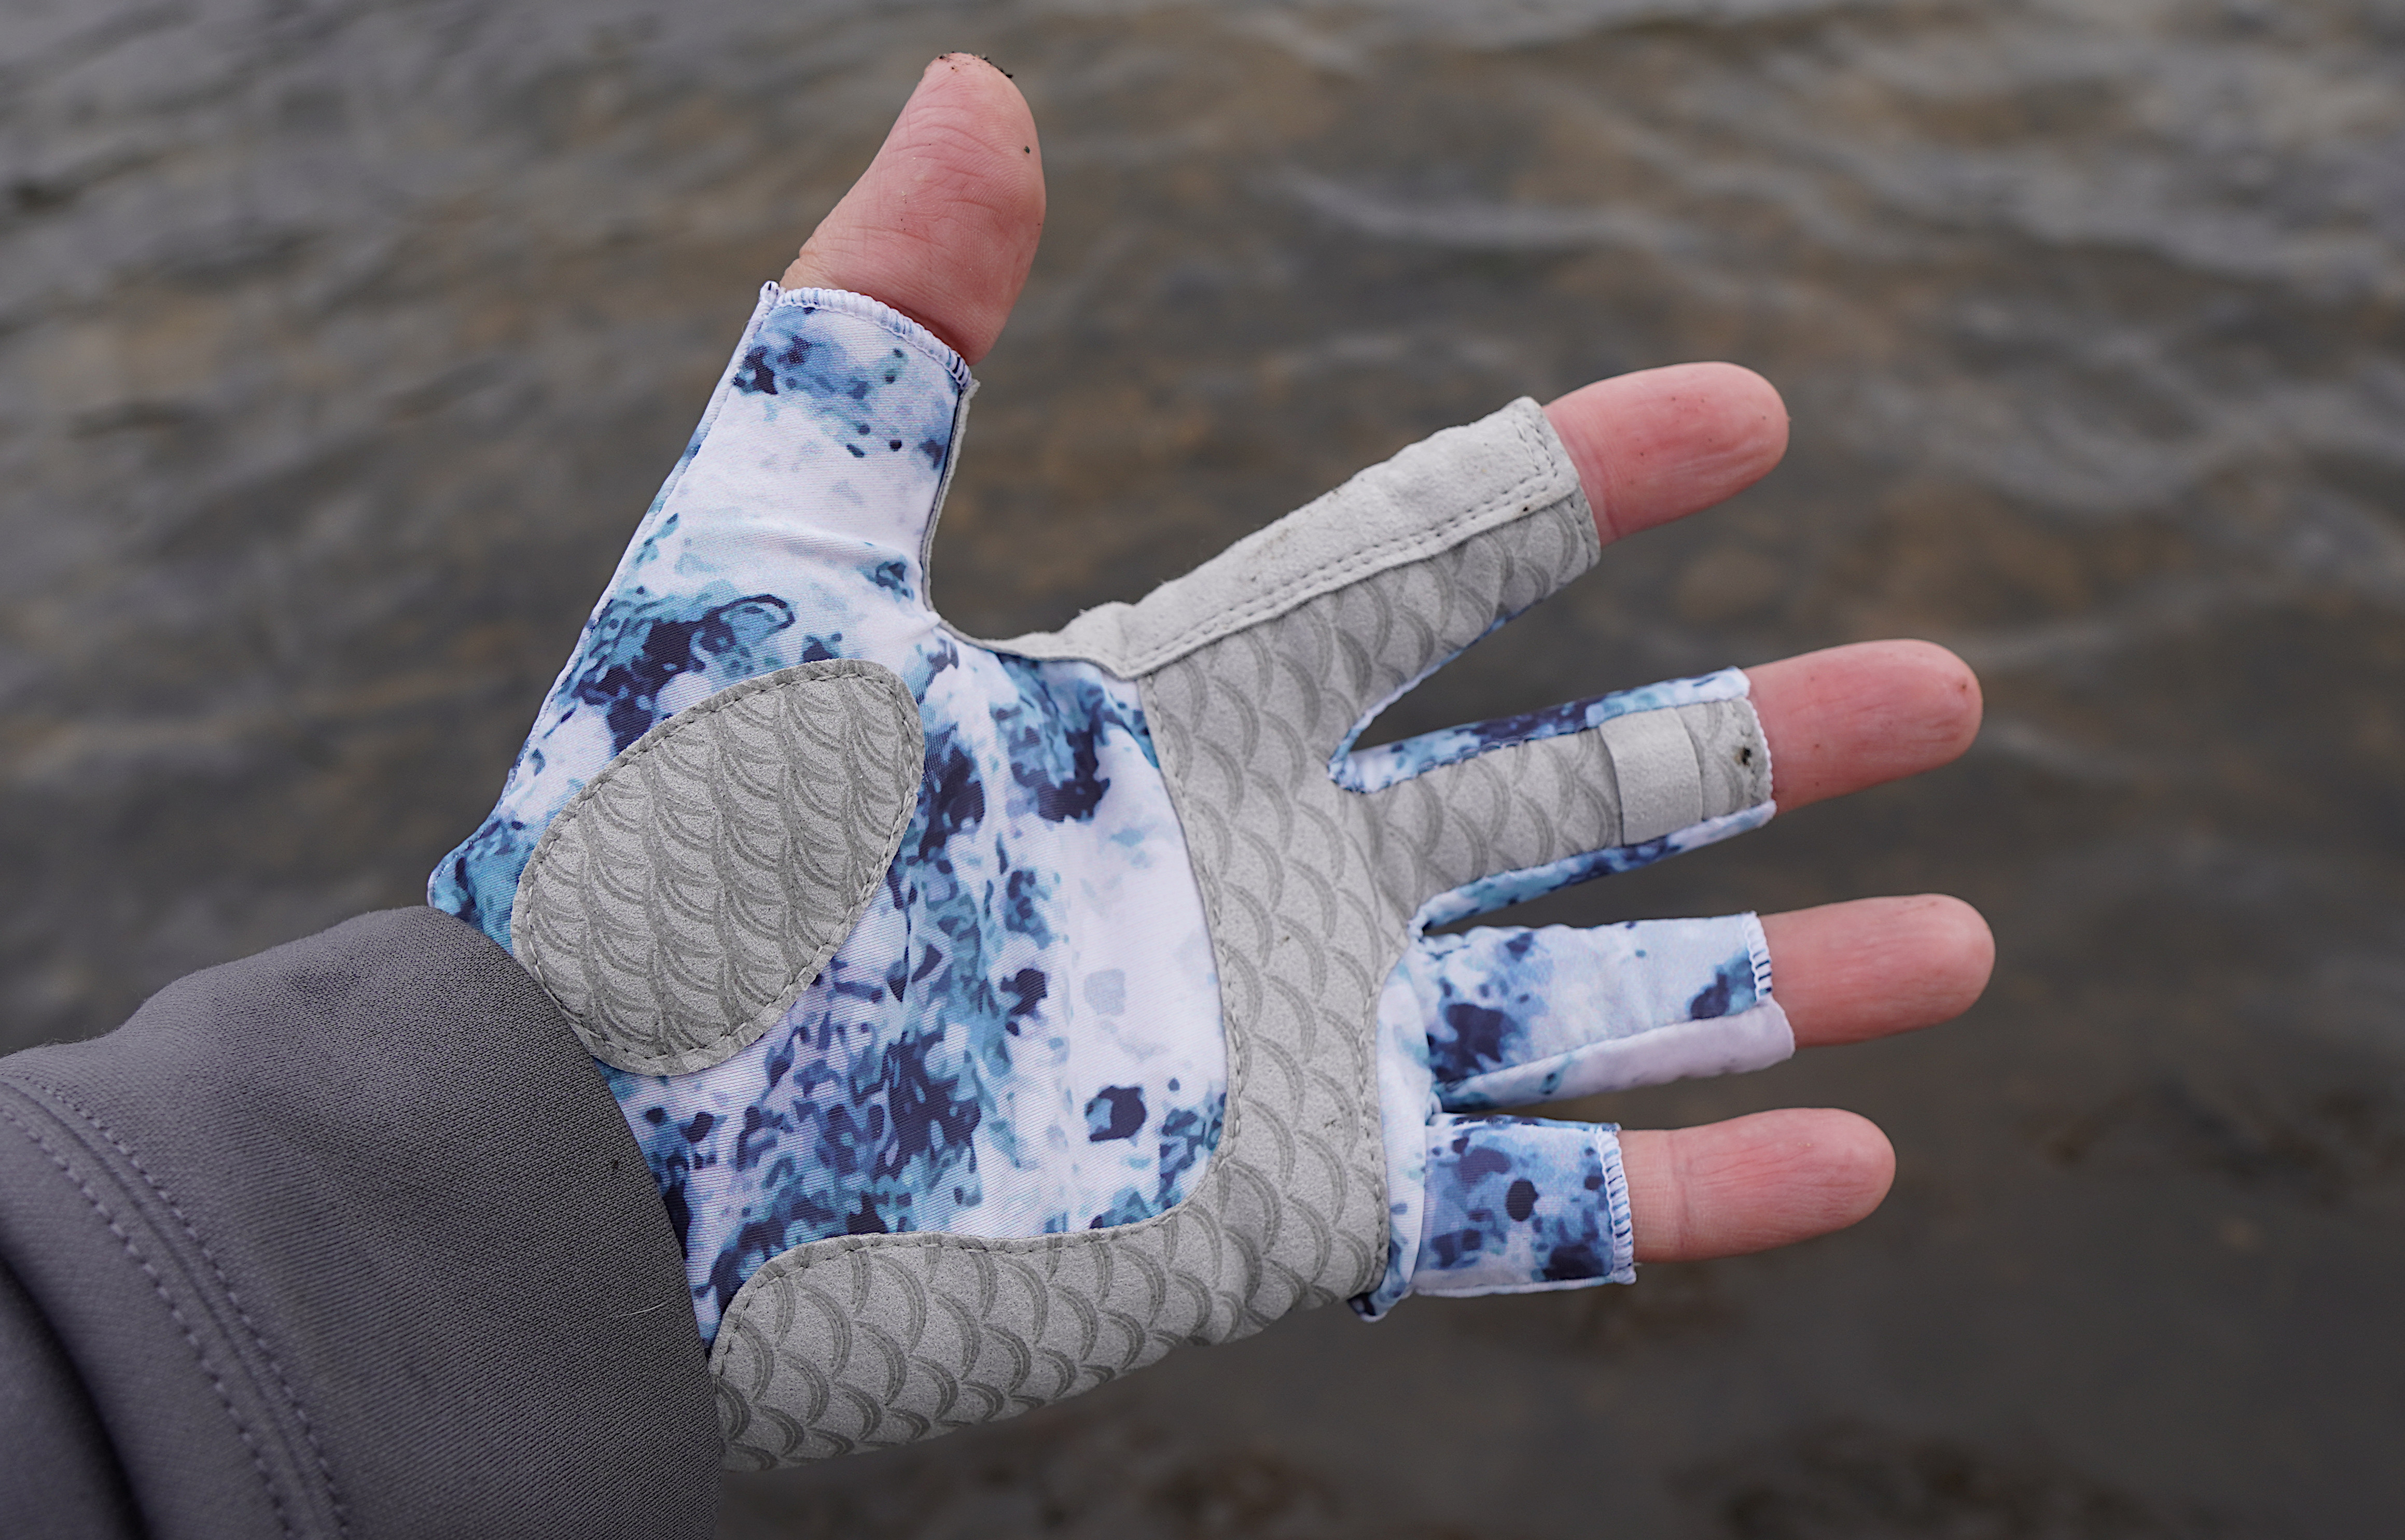 Women Long Size Cotton Full Hand Gloves Sun Protection Gloves Set